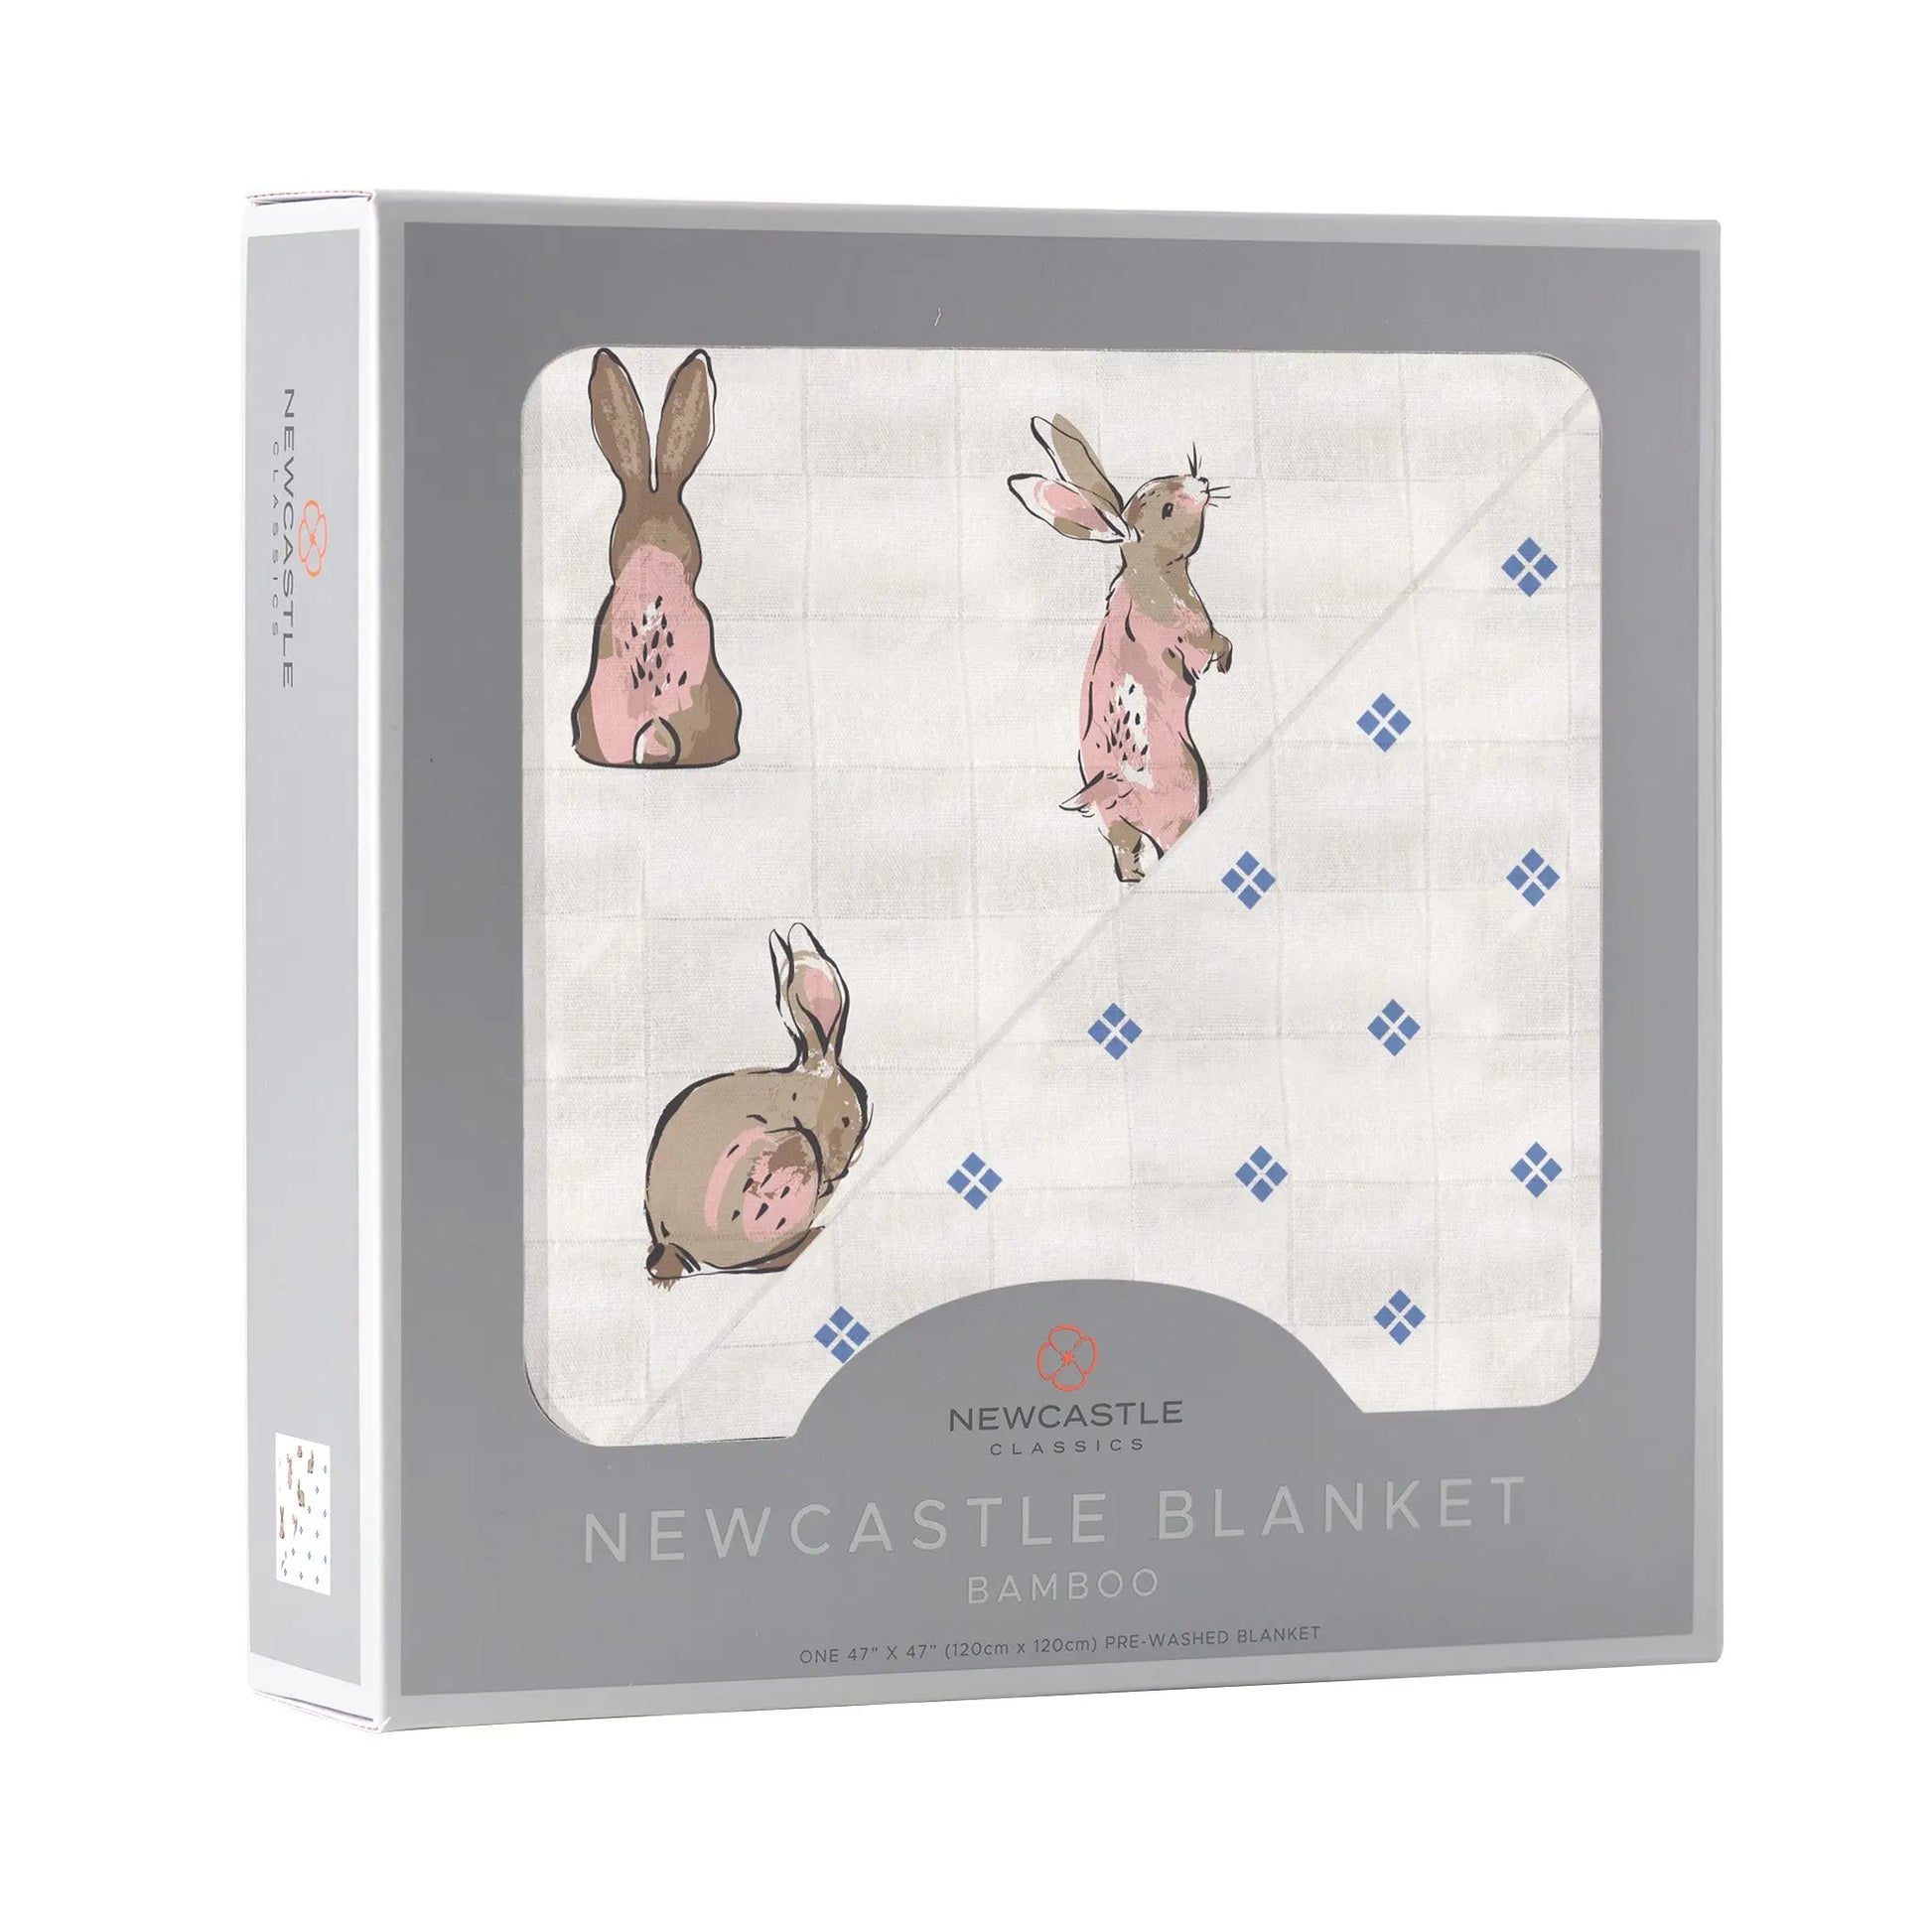 Blanket | Bamboo Muslin - Bunnies & Periwinkle Diamond Newcastle Classics